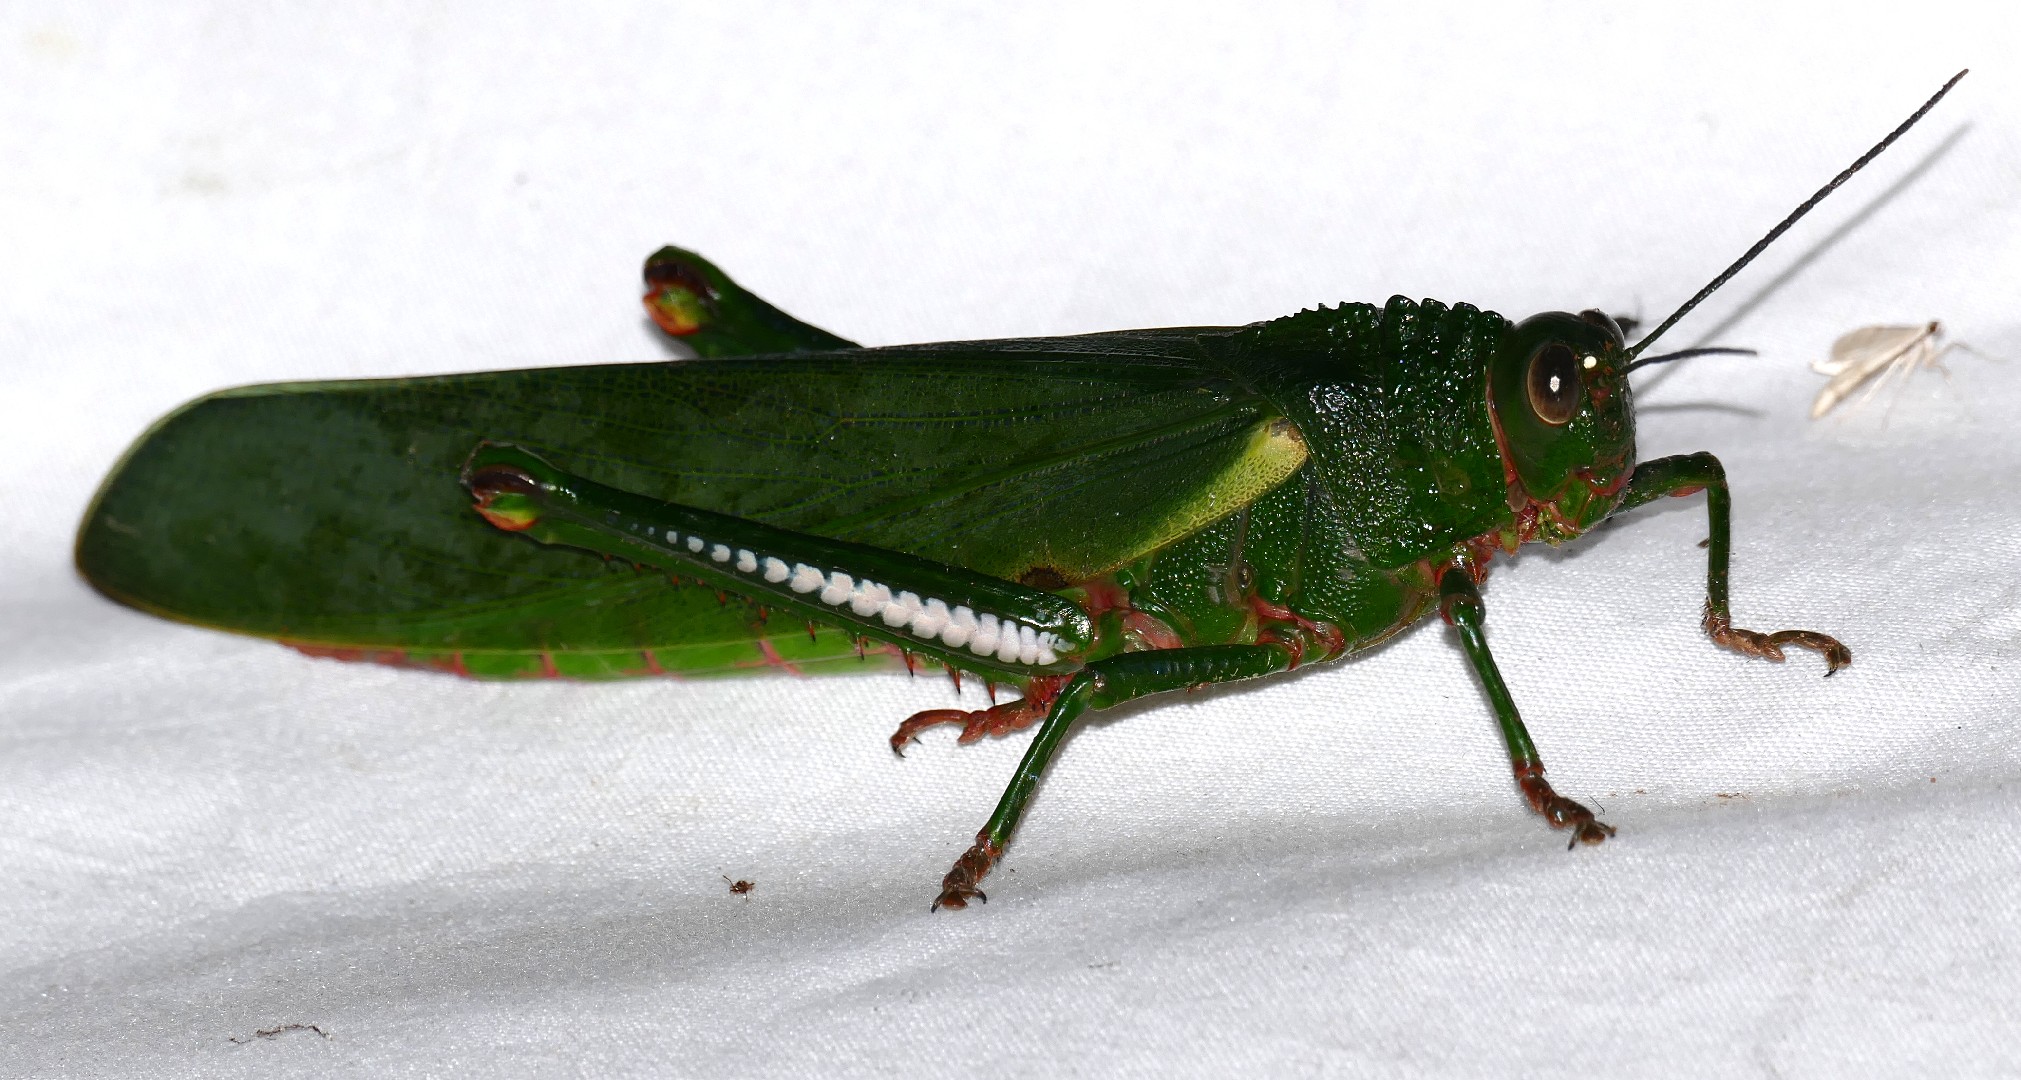 Eastern Lubber Grasshopper (Romalea microptera) - Picture Insect